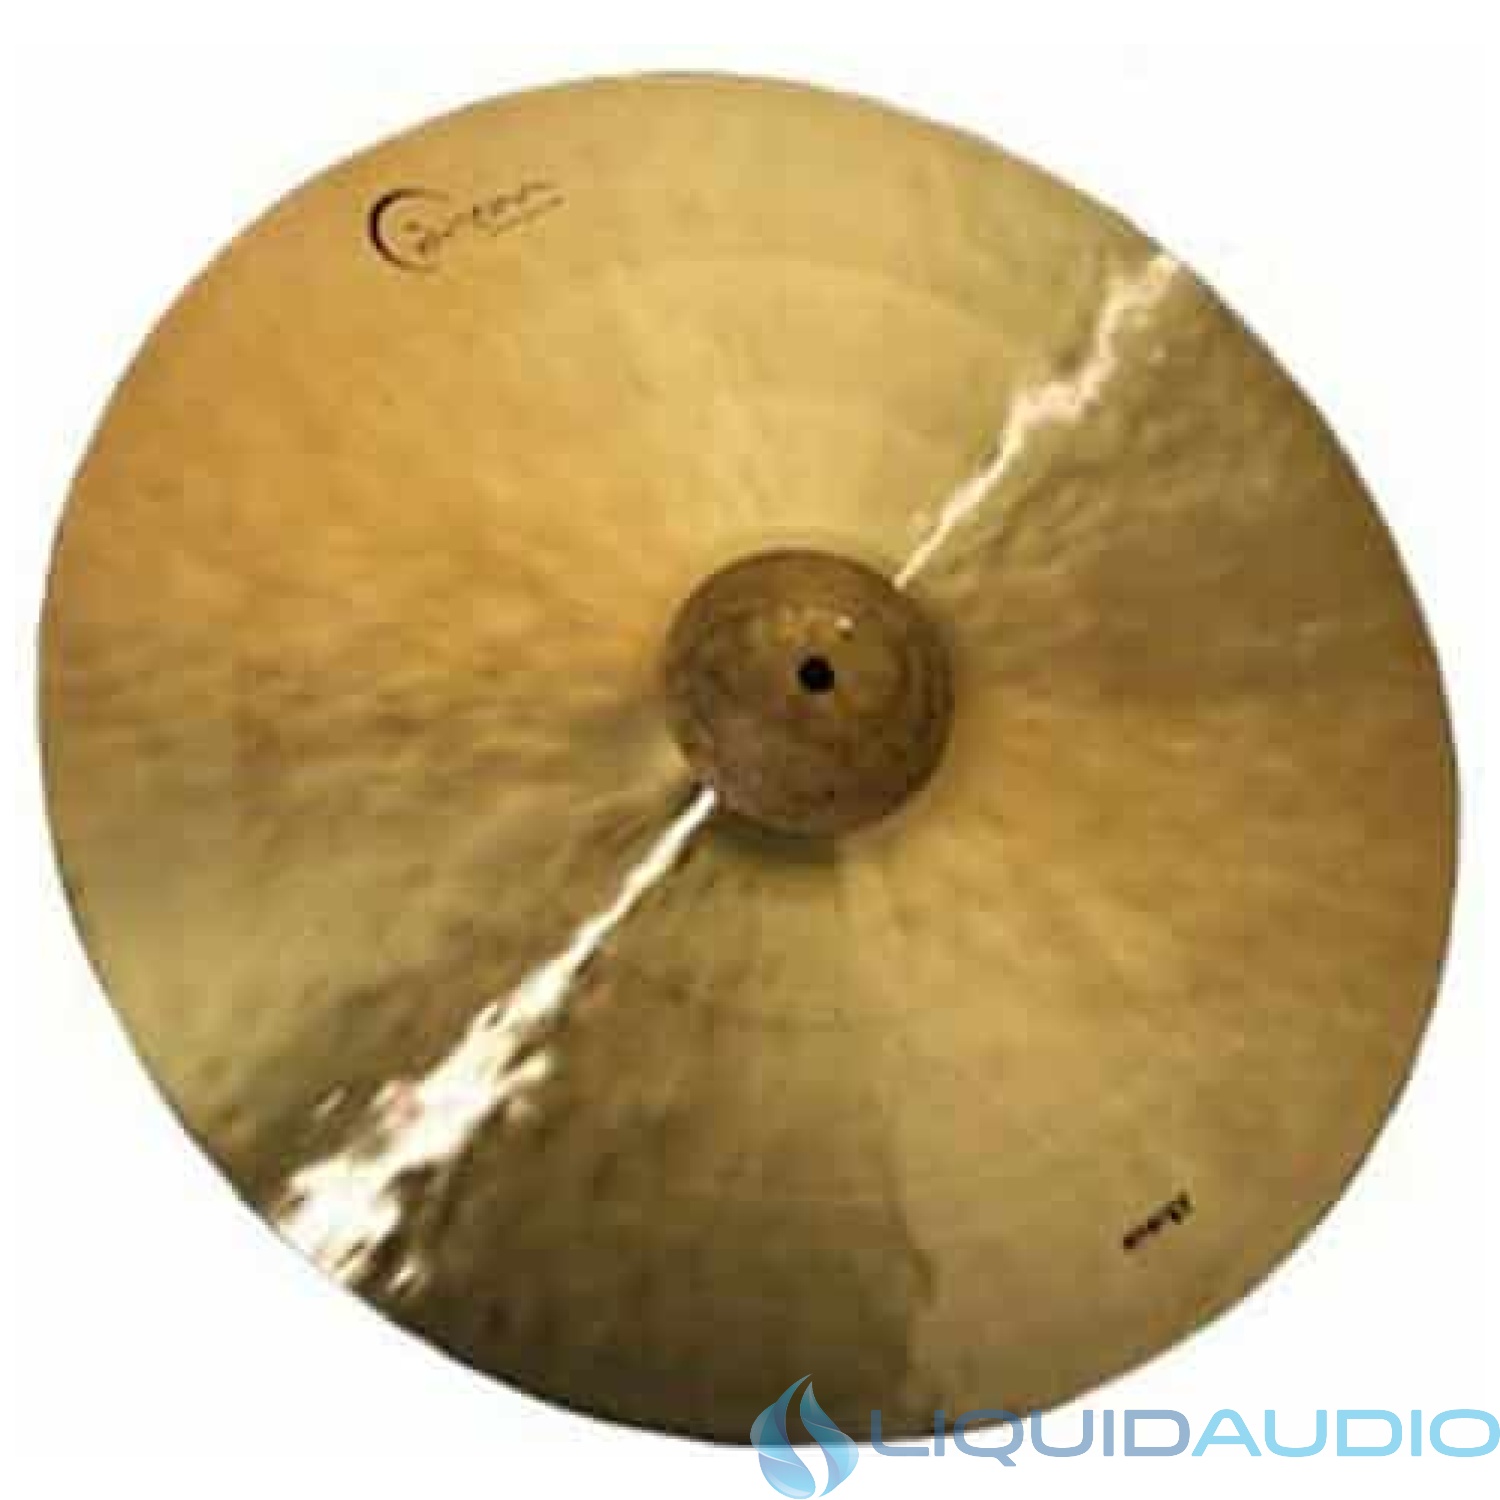 Dream Cymbals ECRRI20 Energy Series Crash/Ride 20" Cymbal